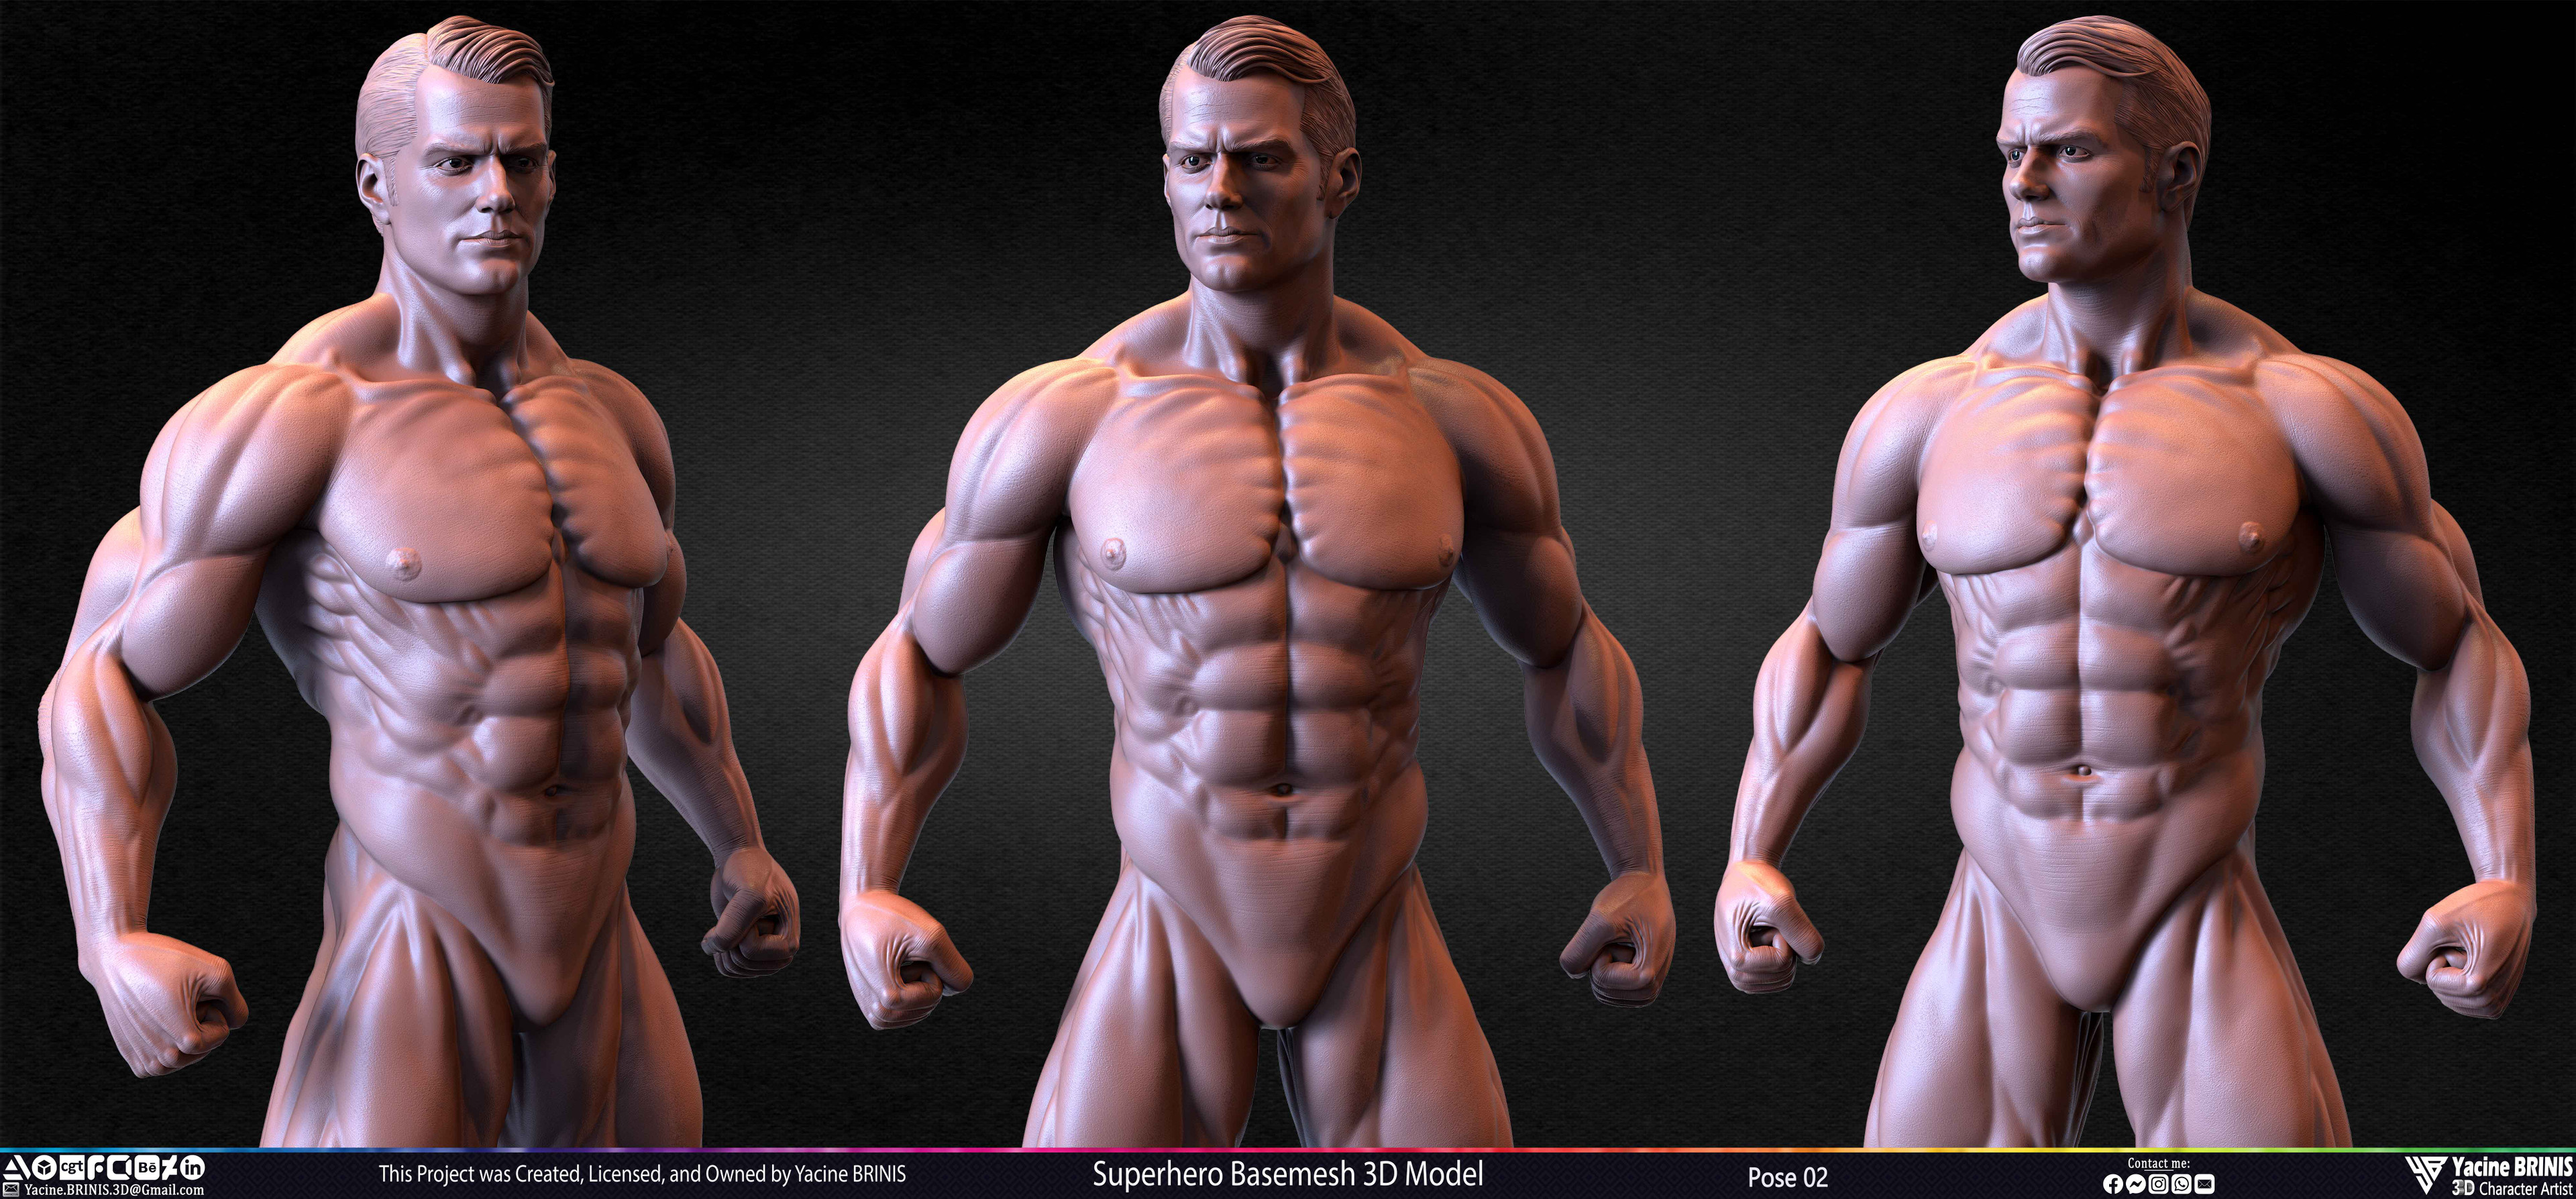 Super-Hero Basemesh 3D Model - Henry Cavill- Man of Steel - Superman - Pose 02 Sculpted by Yacine BRINIS Set 029